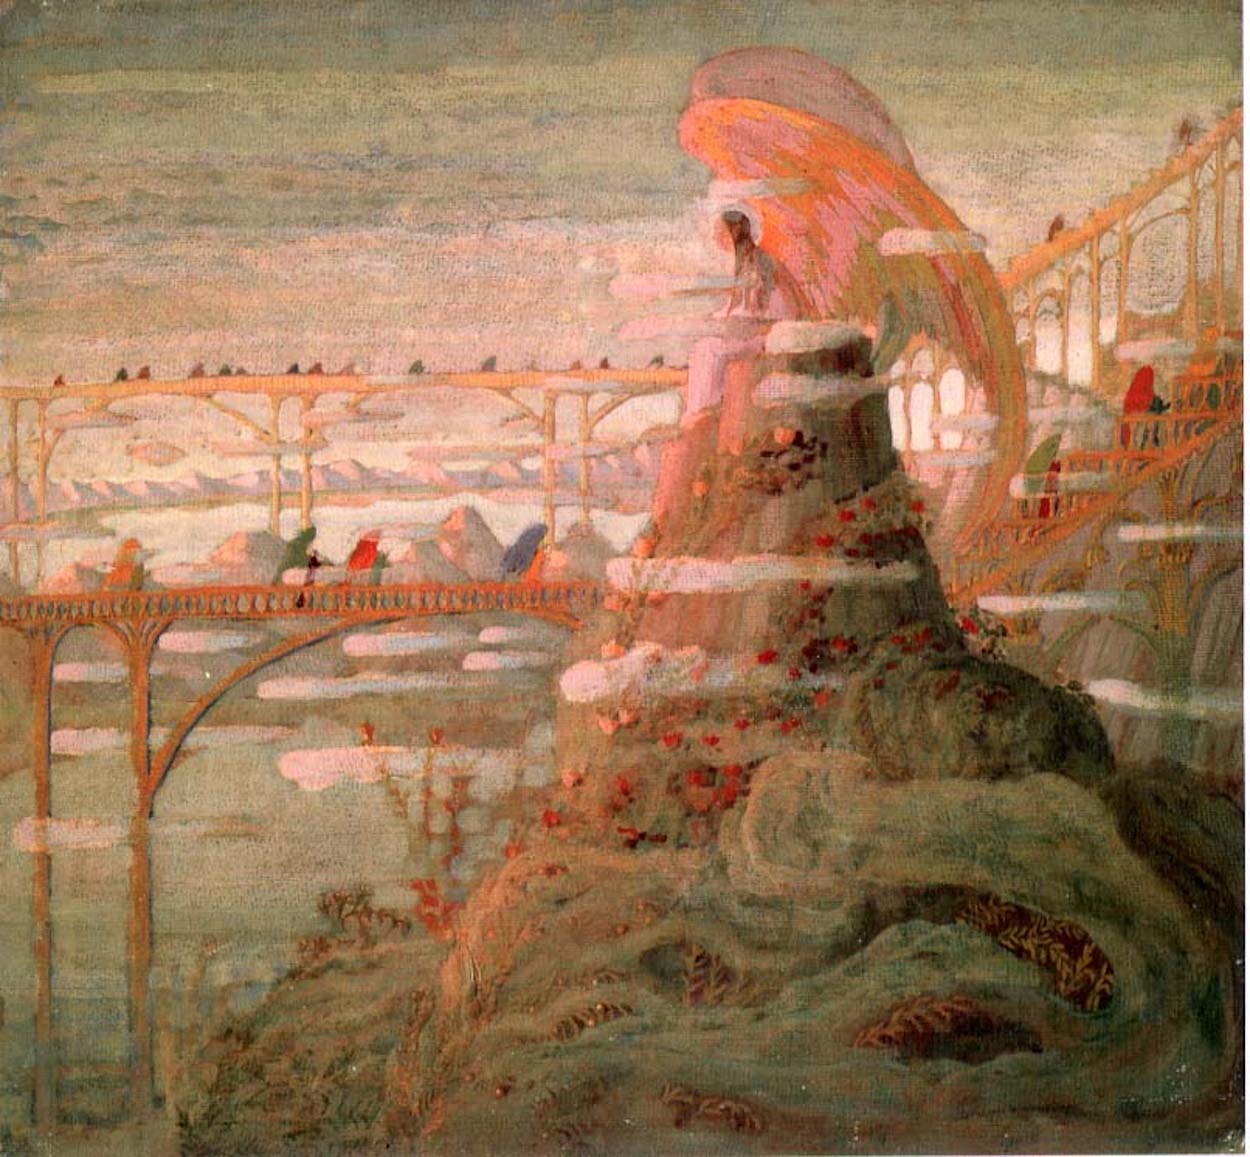 देवदूत (देवदूत प्रस्तावना) by Mikalojus Konstantinas Čiurlionis - १९०९ - ५० x ५३.७ से.मी. 